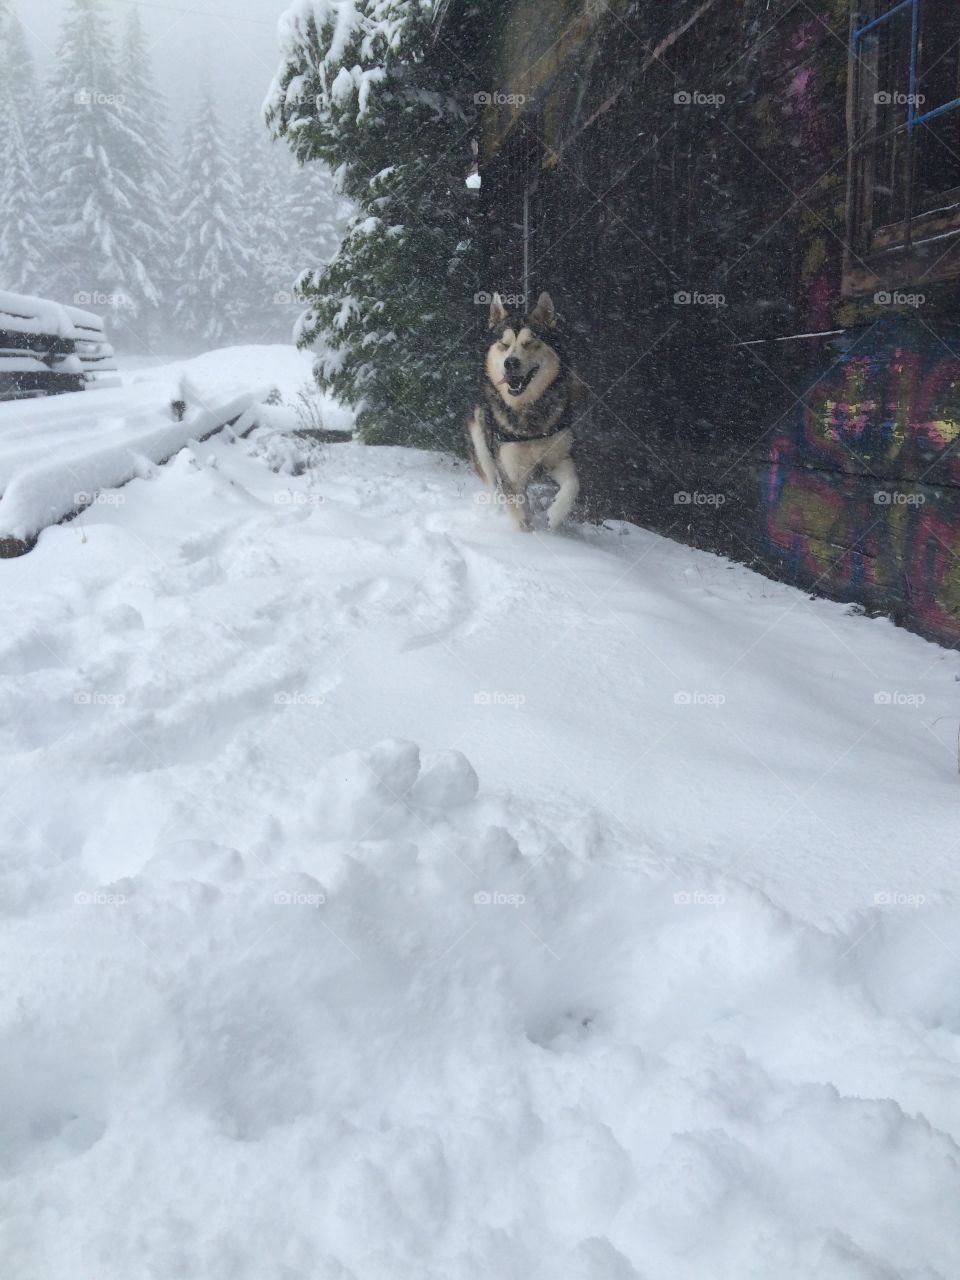 Snow dog!